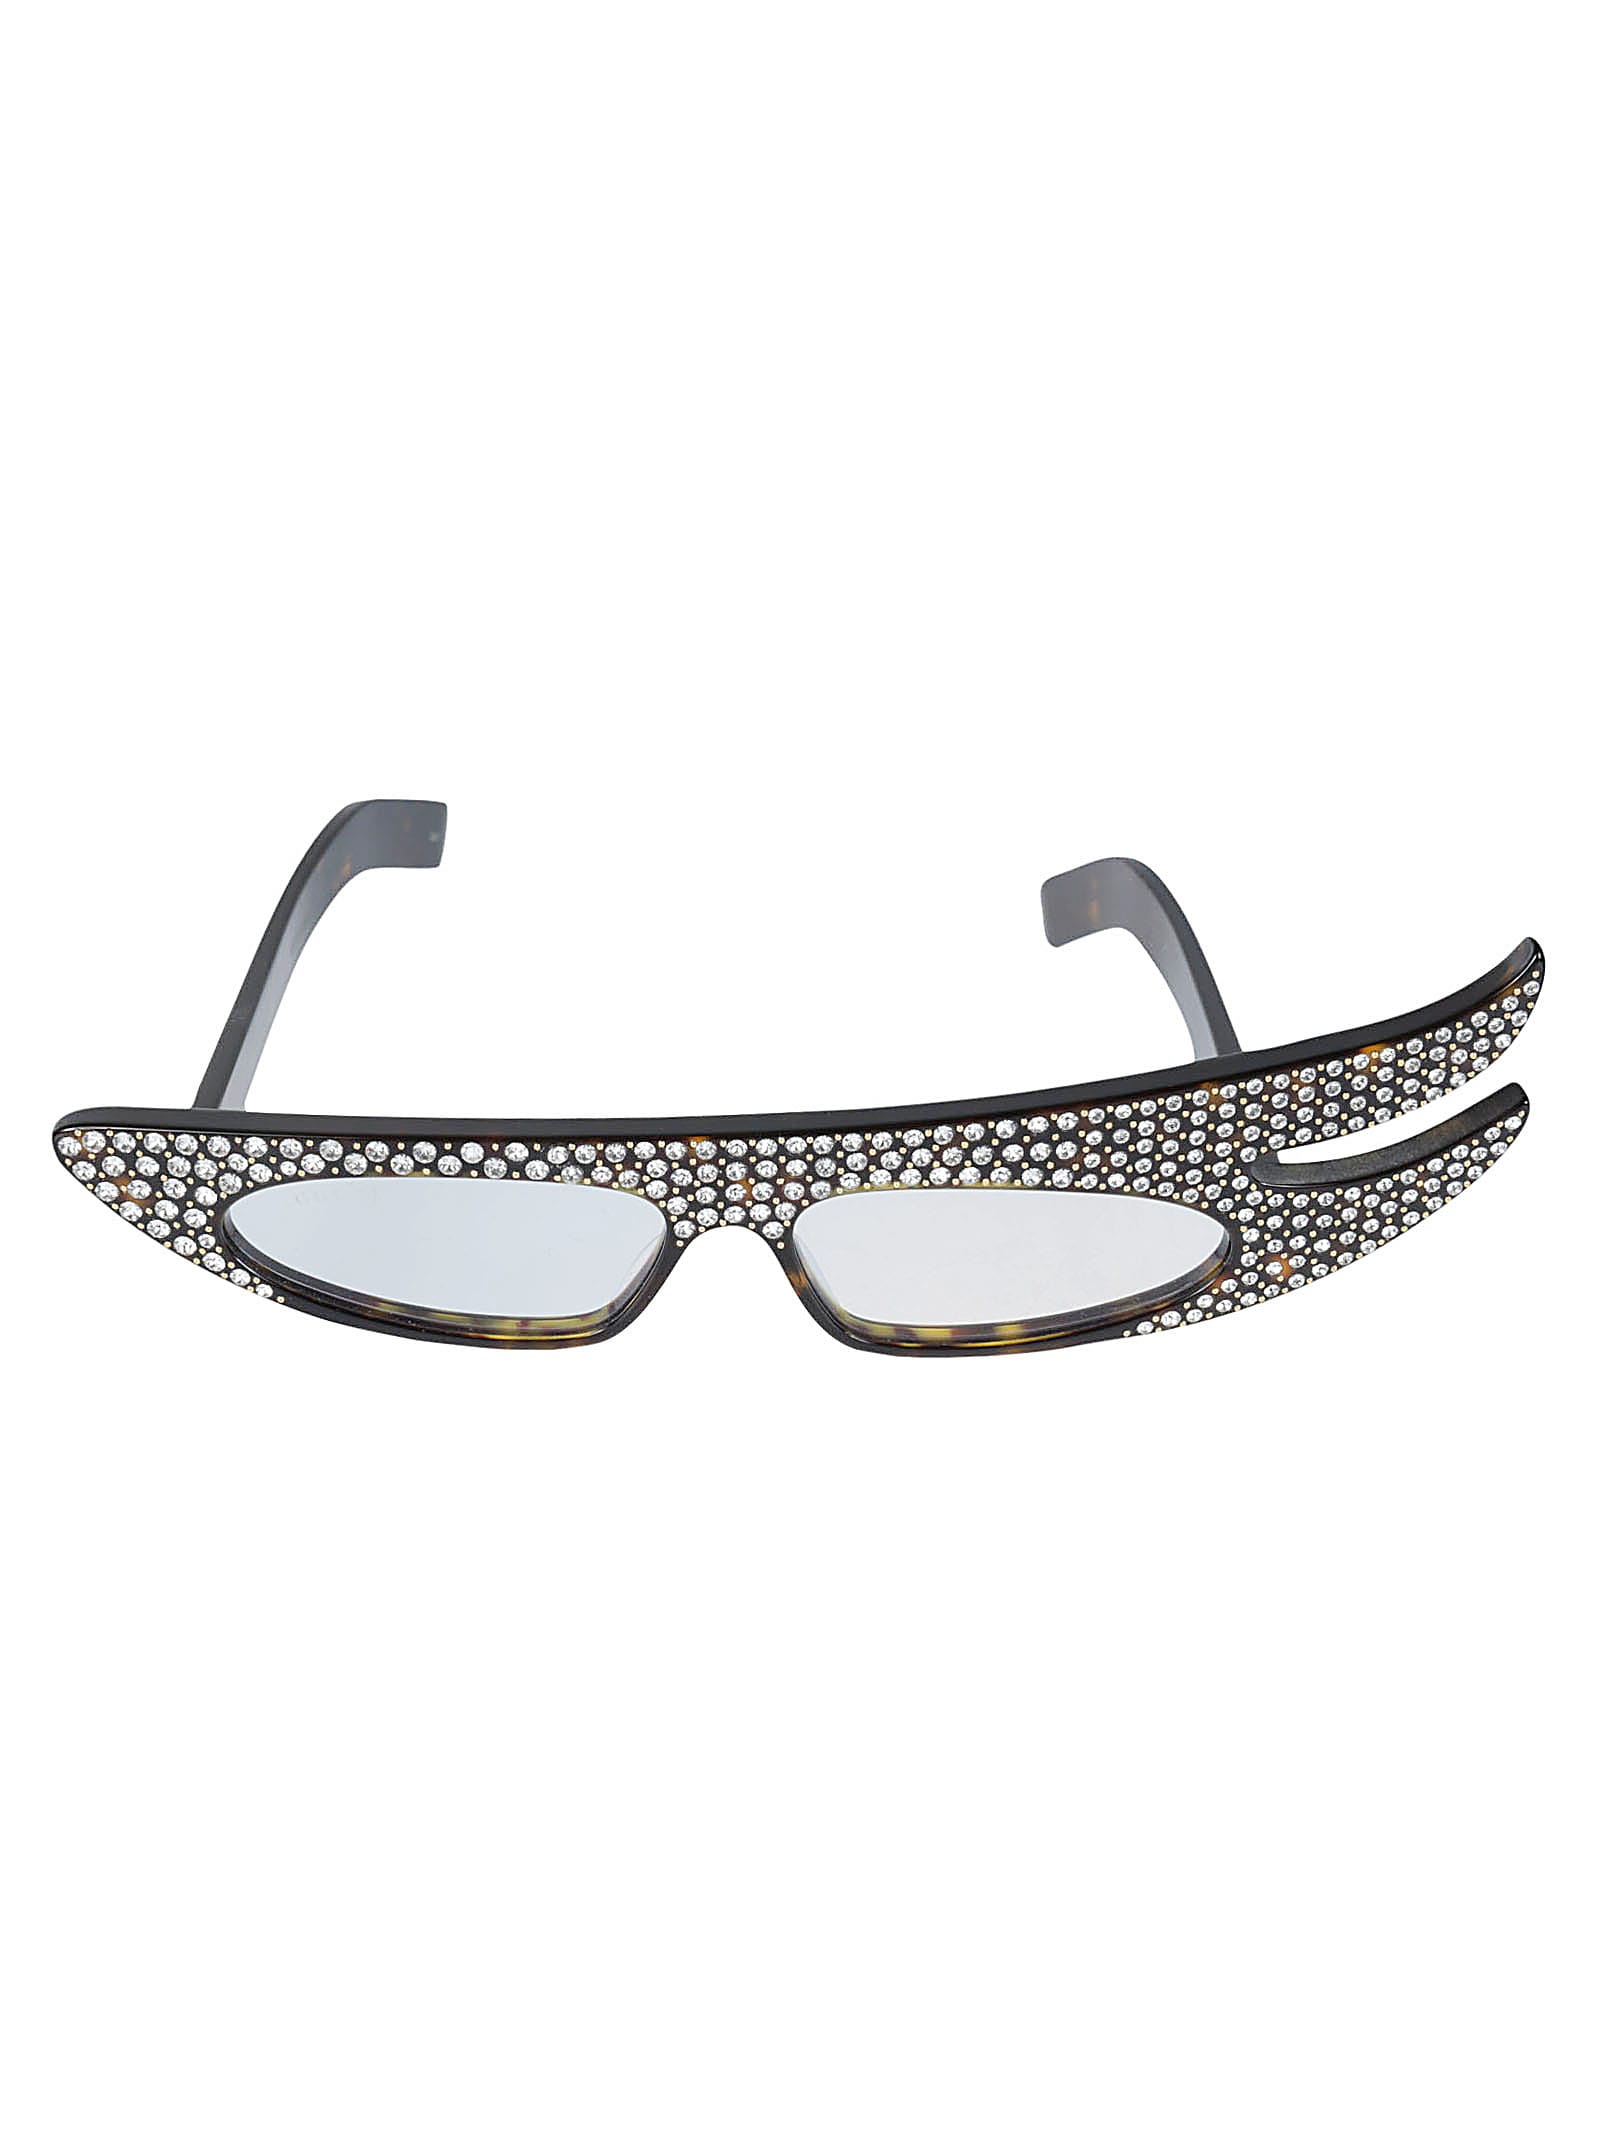 Gucci Embellished Frame Sunglasses In 001-havana-havana-light B